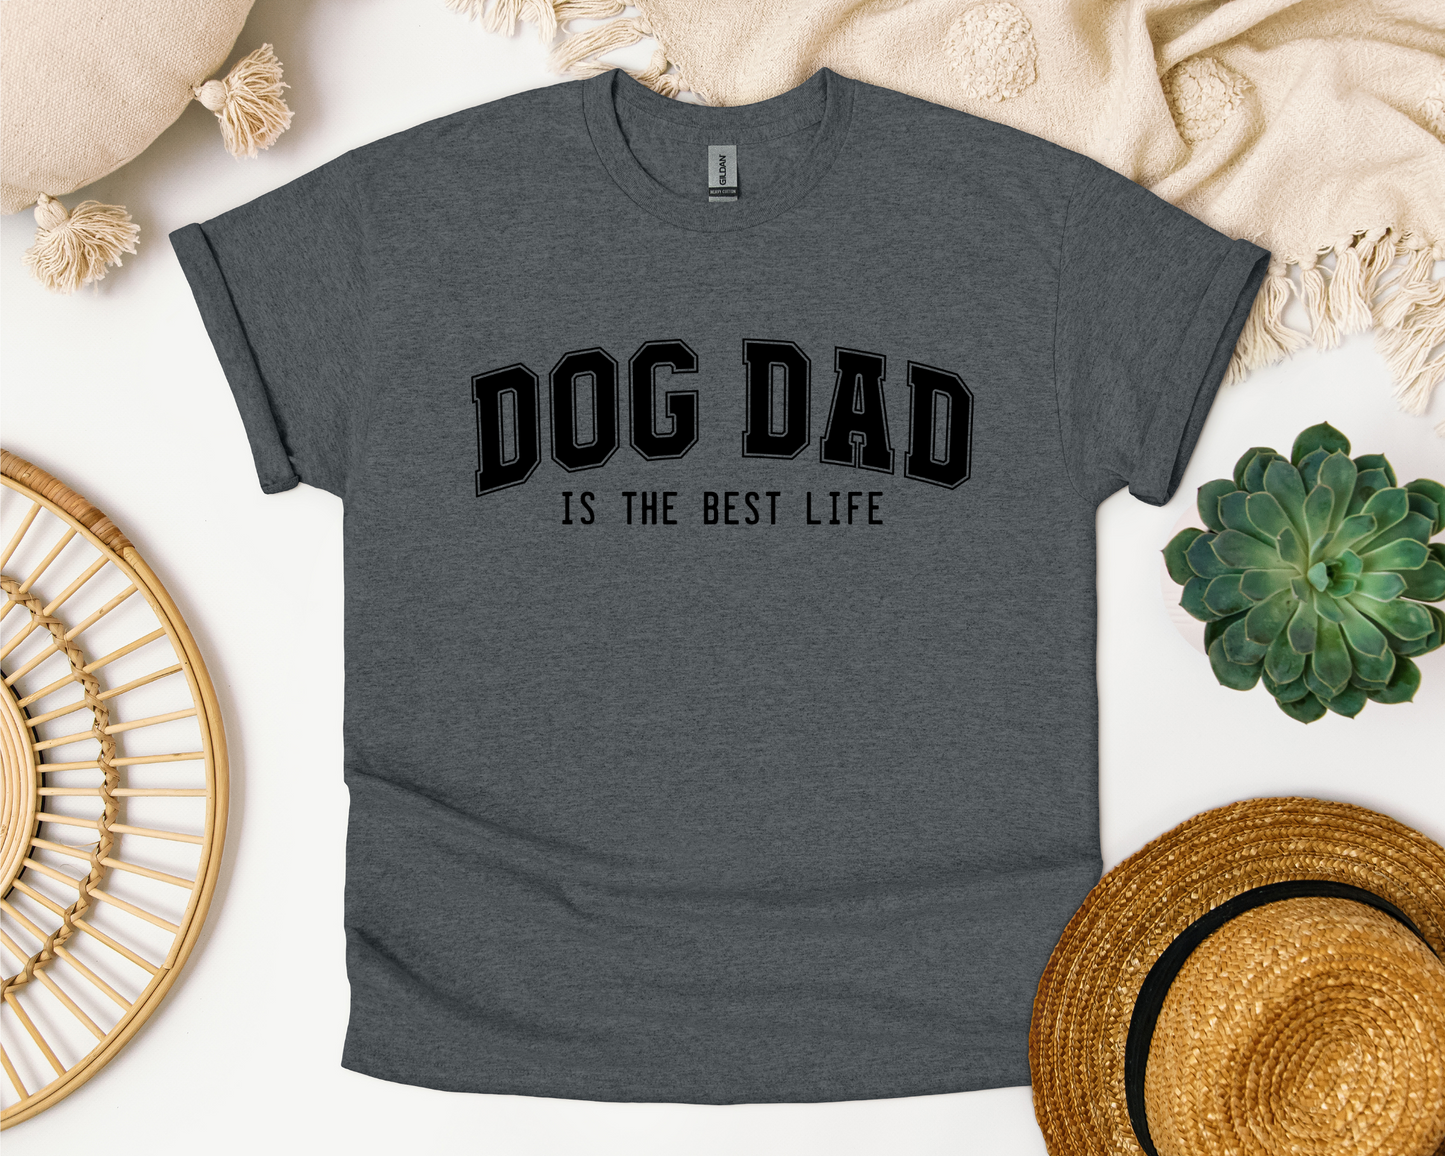 Dog Dad Crewneck T-shirt, Dark Heather